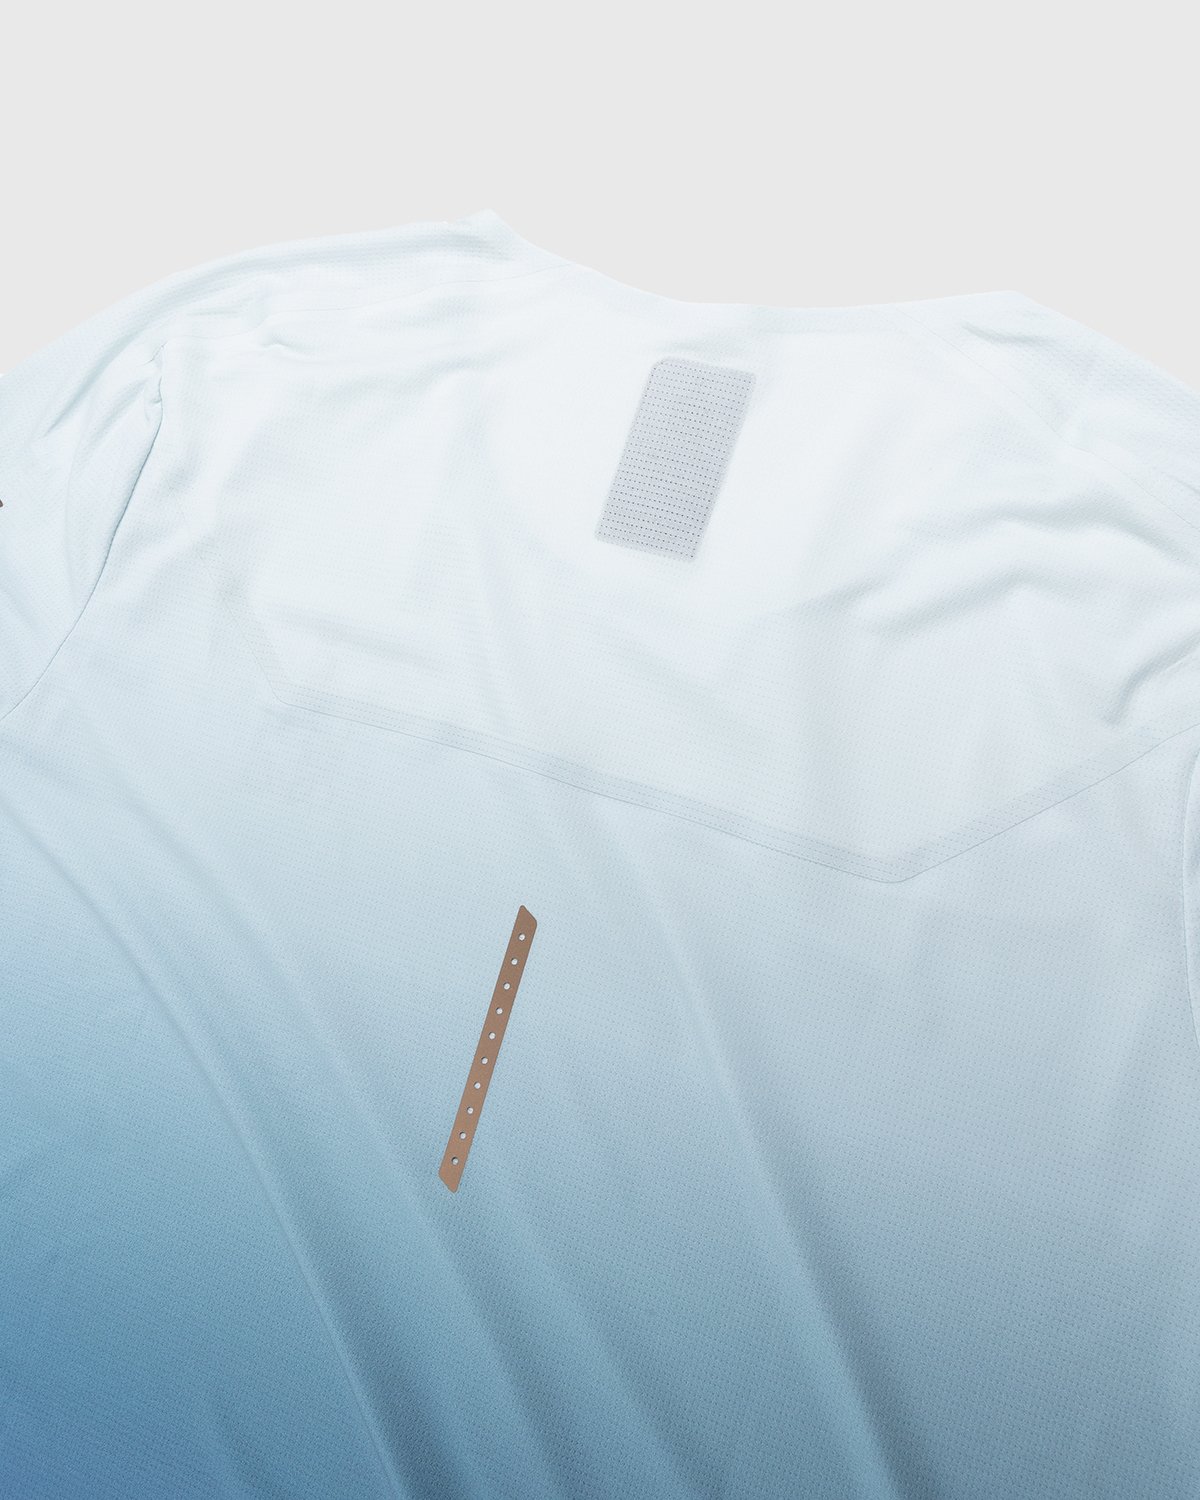 Loewe x On - Women's Performance T-Shirt Gradient Grey - Clothing - Blue - Image 3